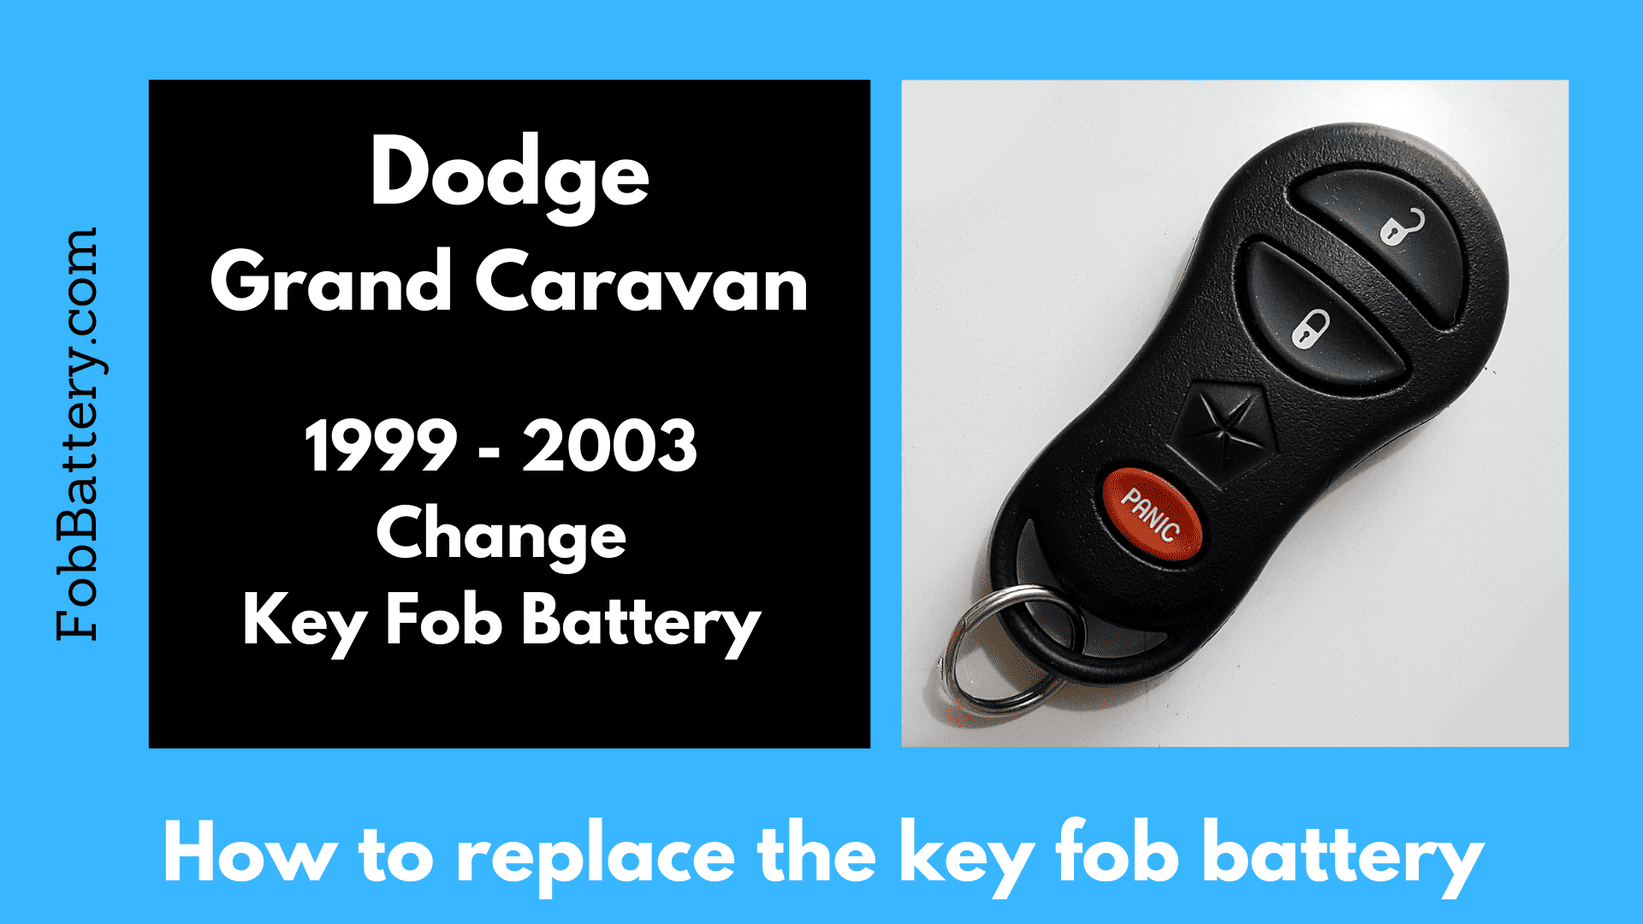 Dodge grand caravan key fob battery replacement